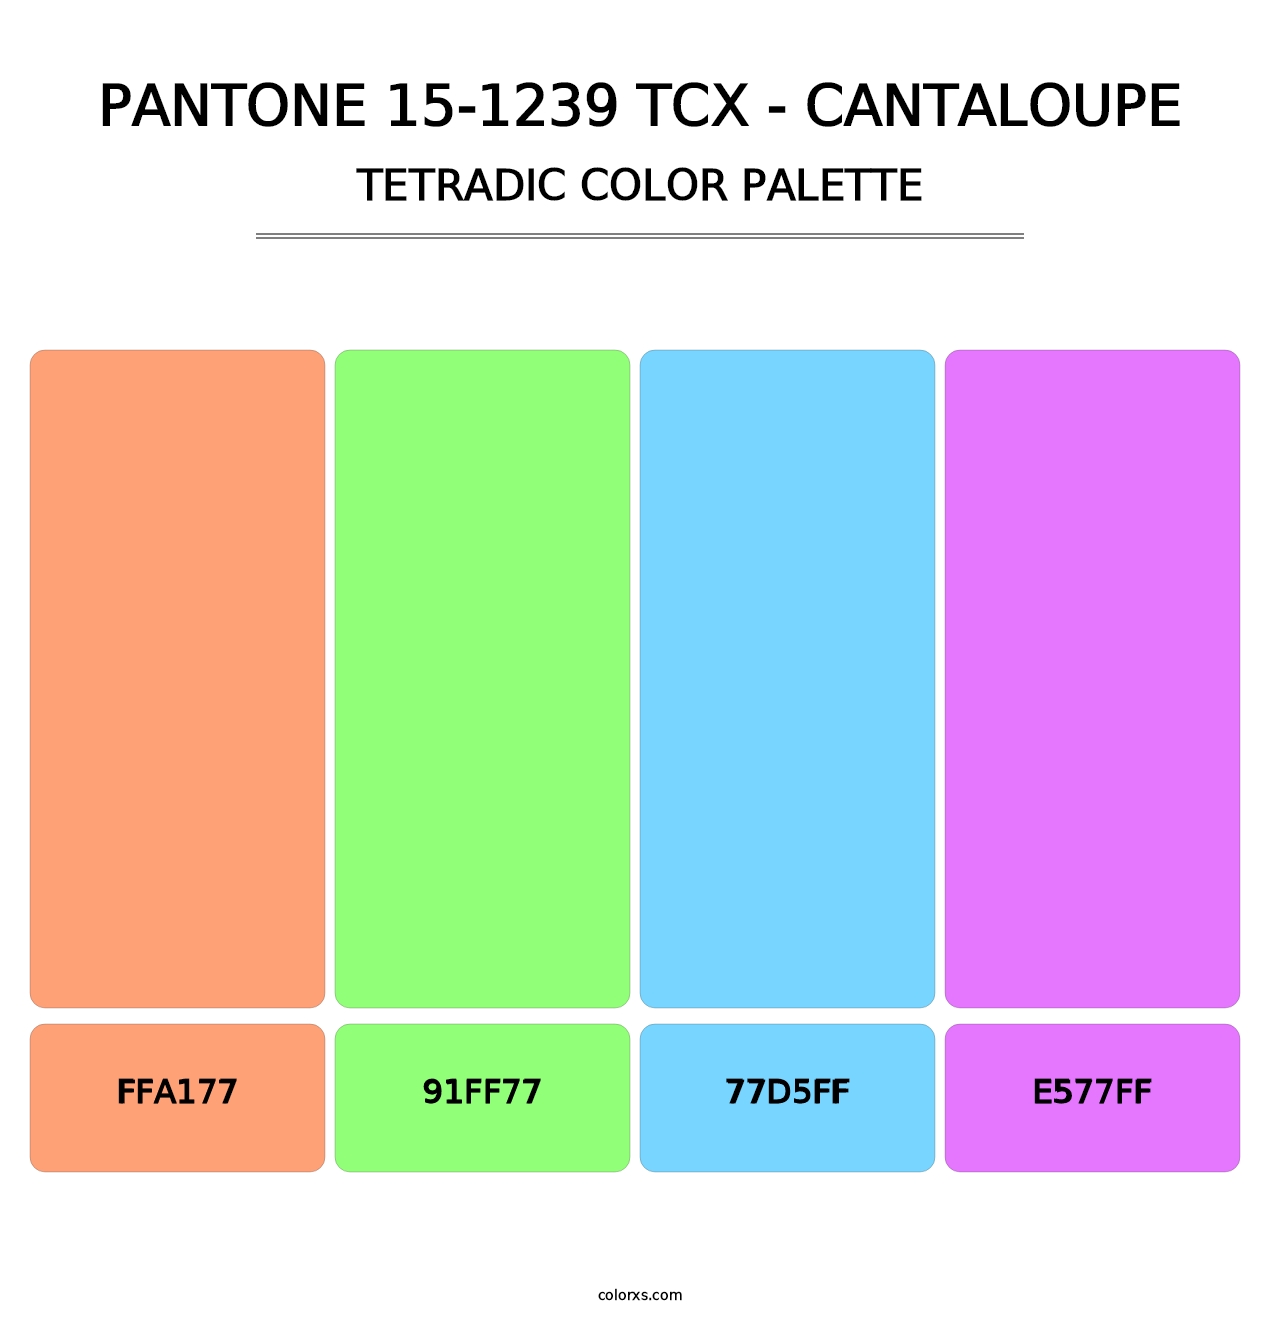 PANTONE 15-1239 TCX - Cantaloupe - Tetradic Color Palette